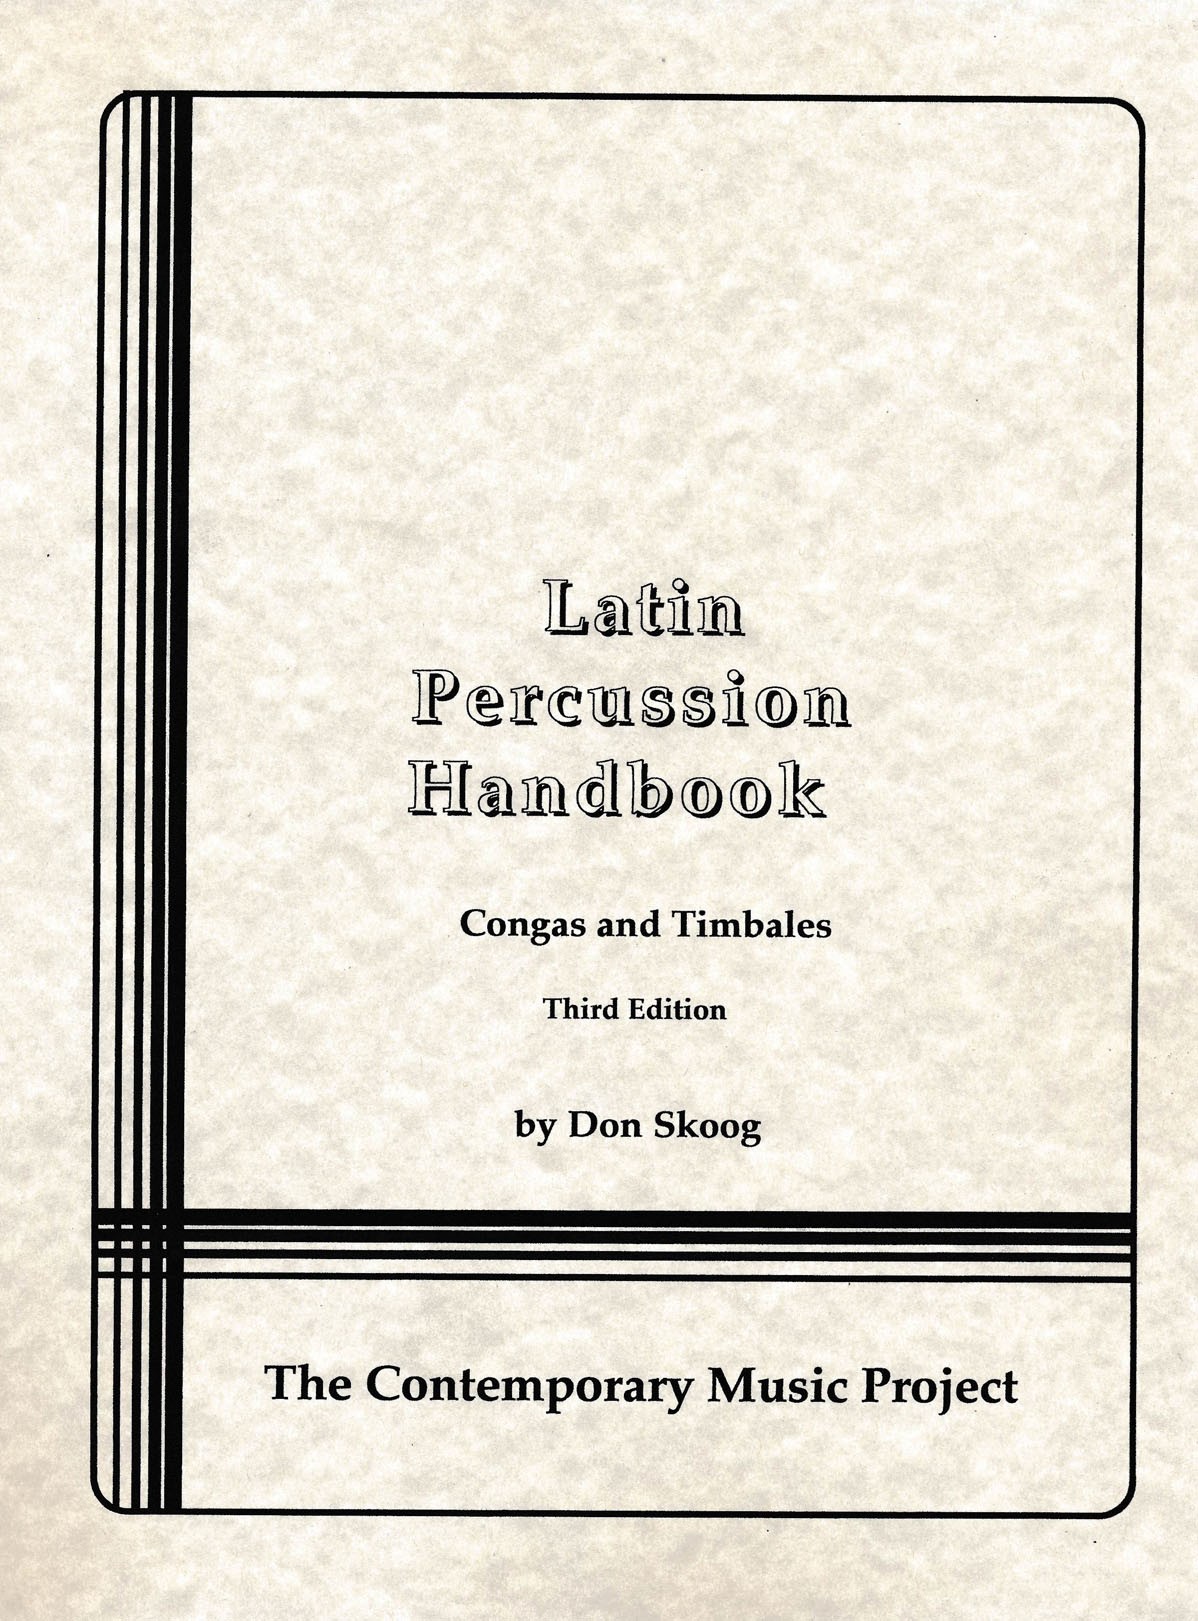 Latin-Percussion Handbook by Donald Skoog